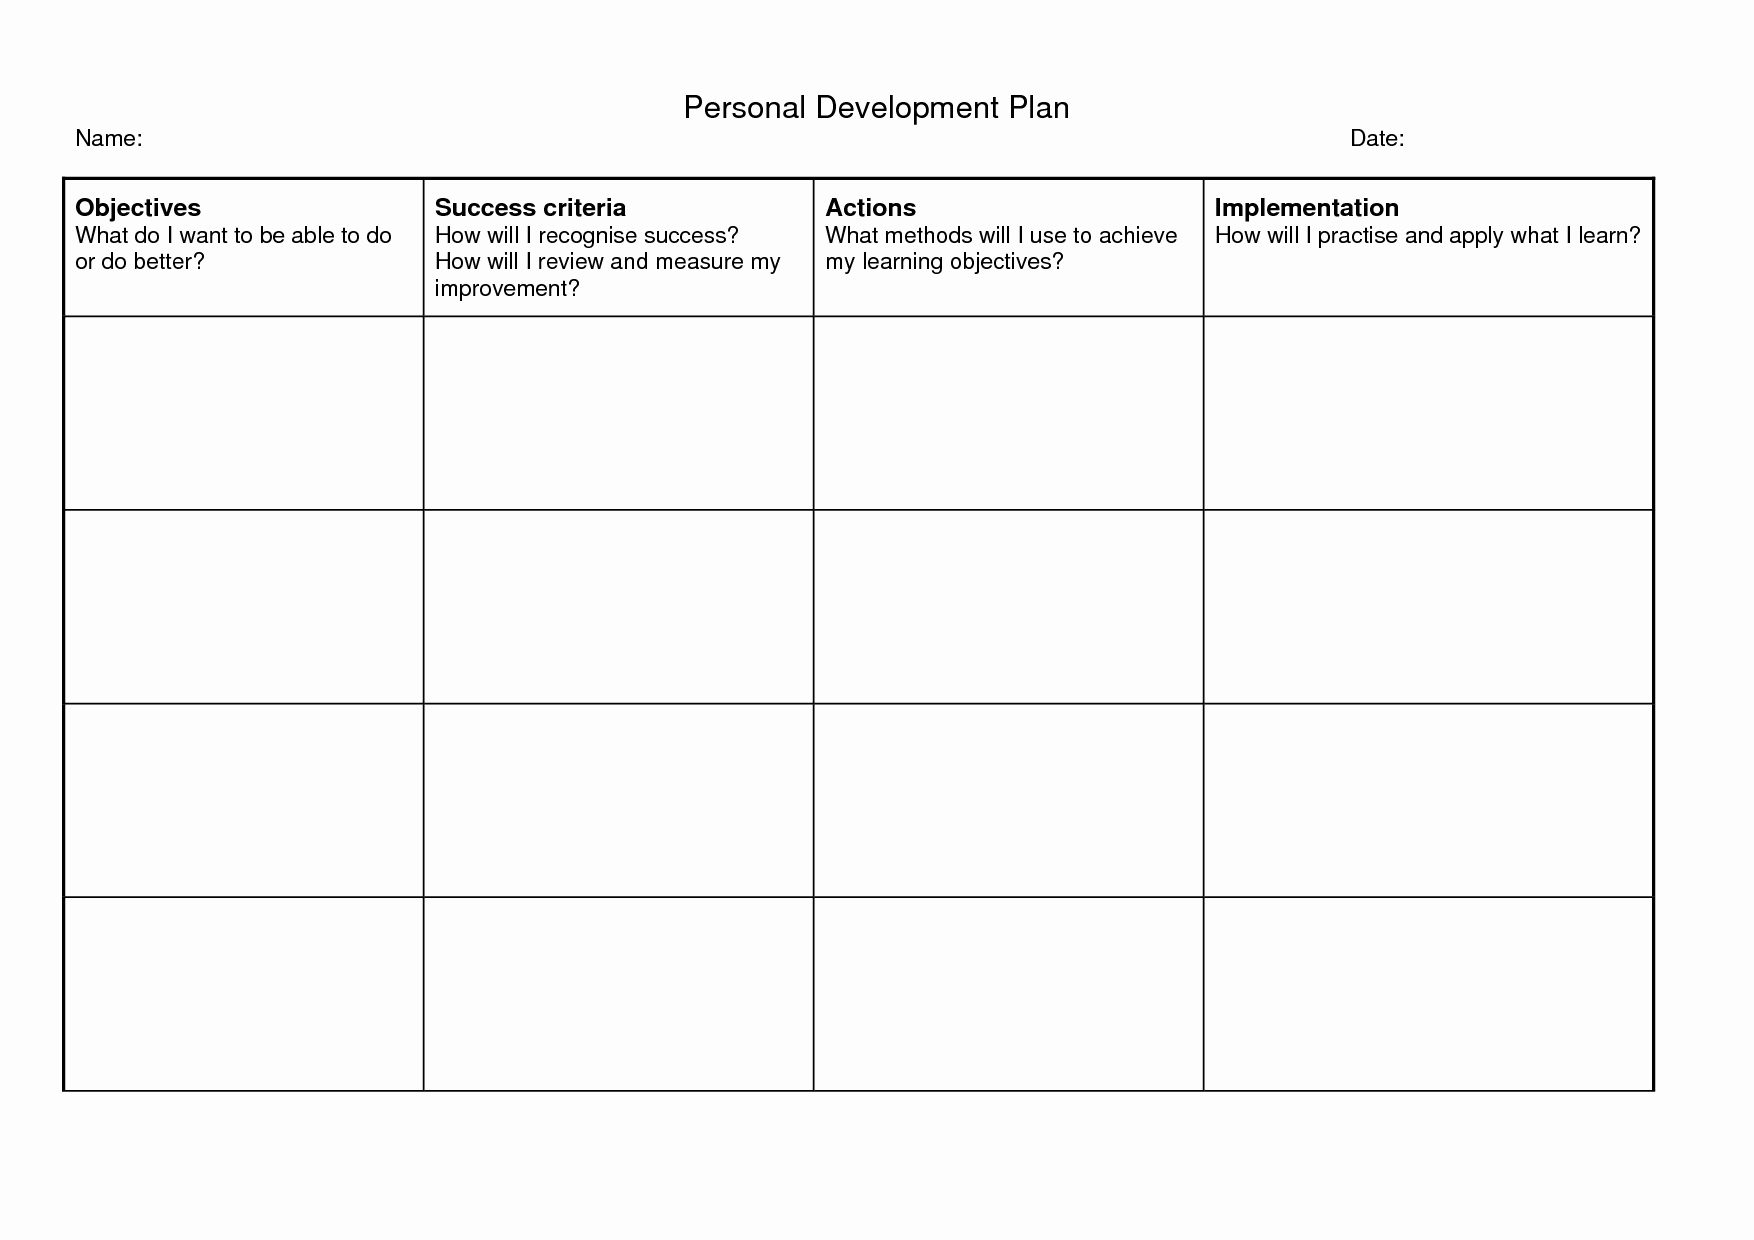 Personal Development Plan Template Luxury Personal Development Plan Template